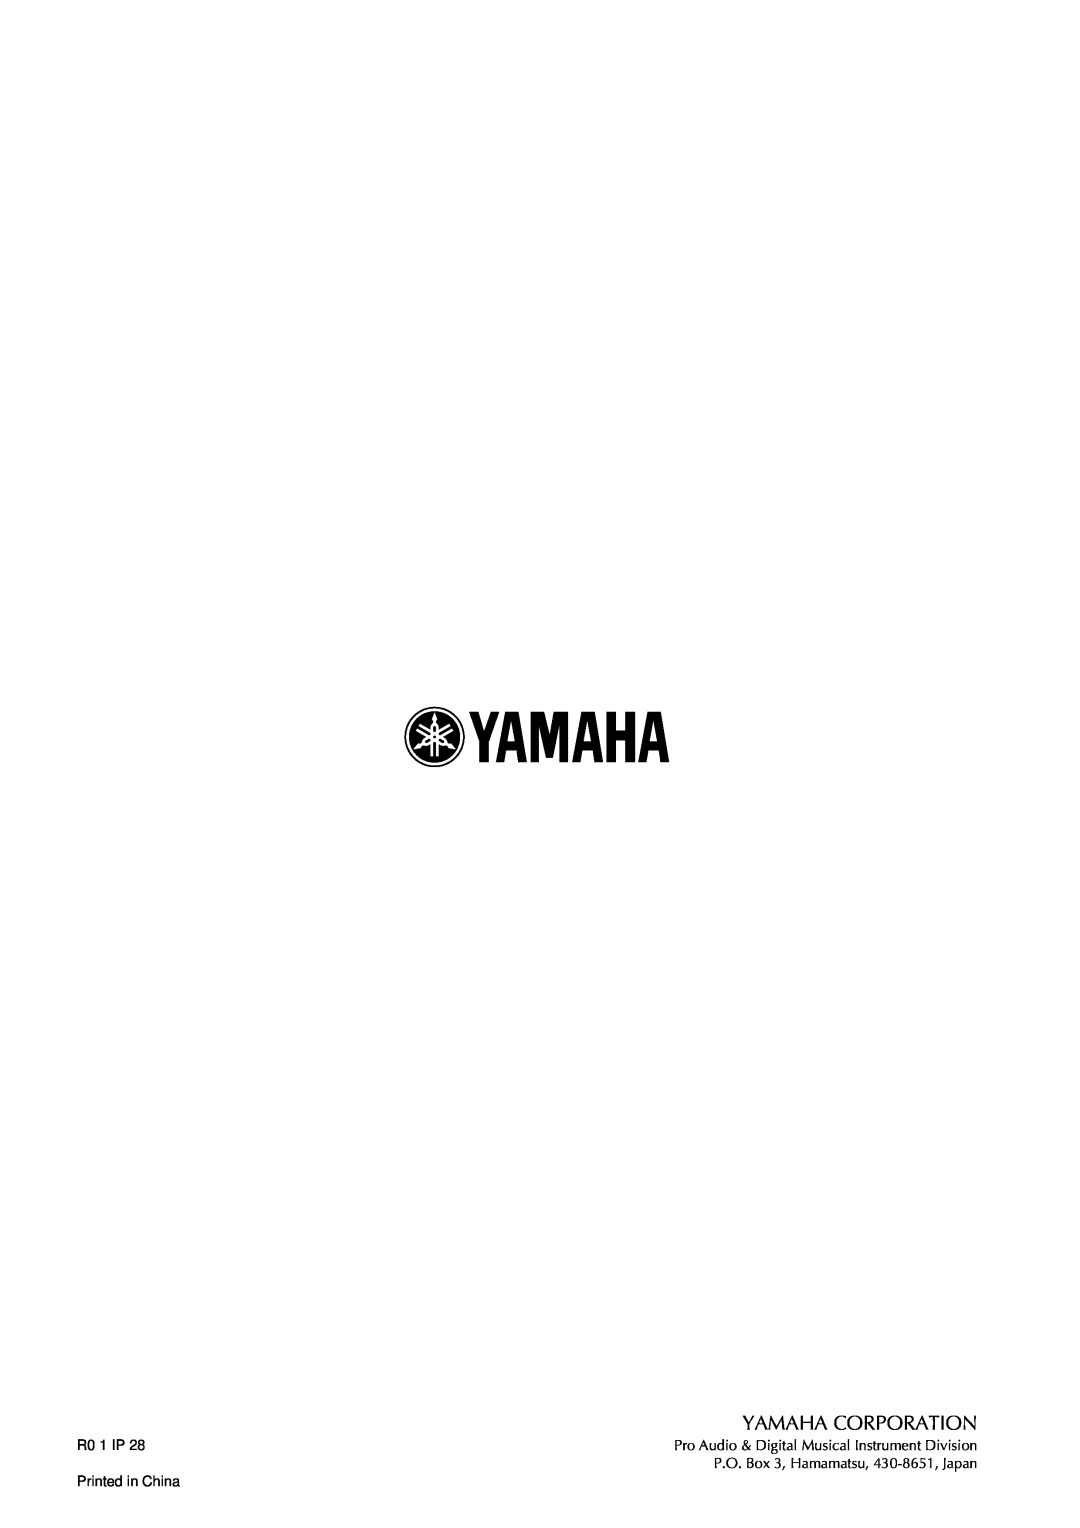 Yamaha MSP3 owner manual Yamaha Corporation, R0 1 IP, Pro Audio & Digital Musical Instrument Division 